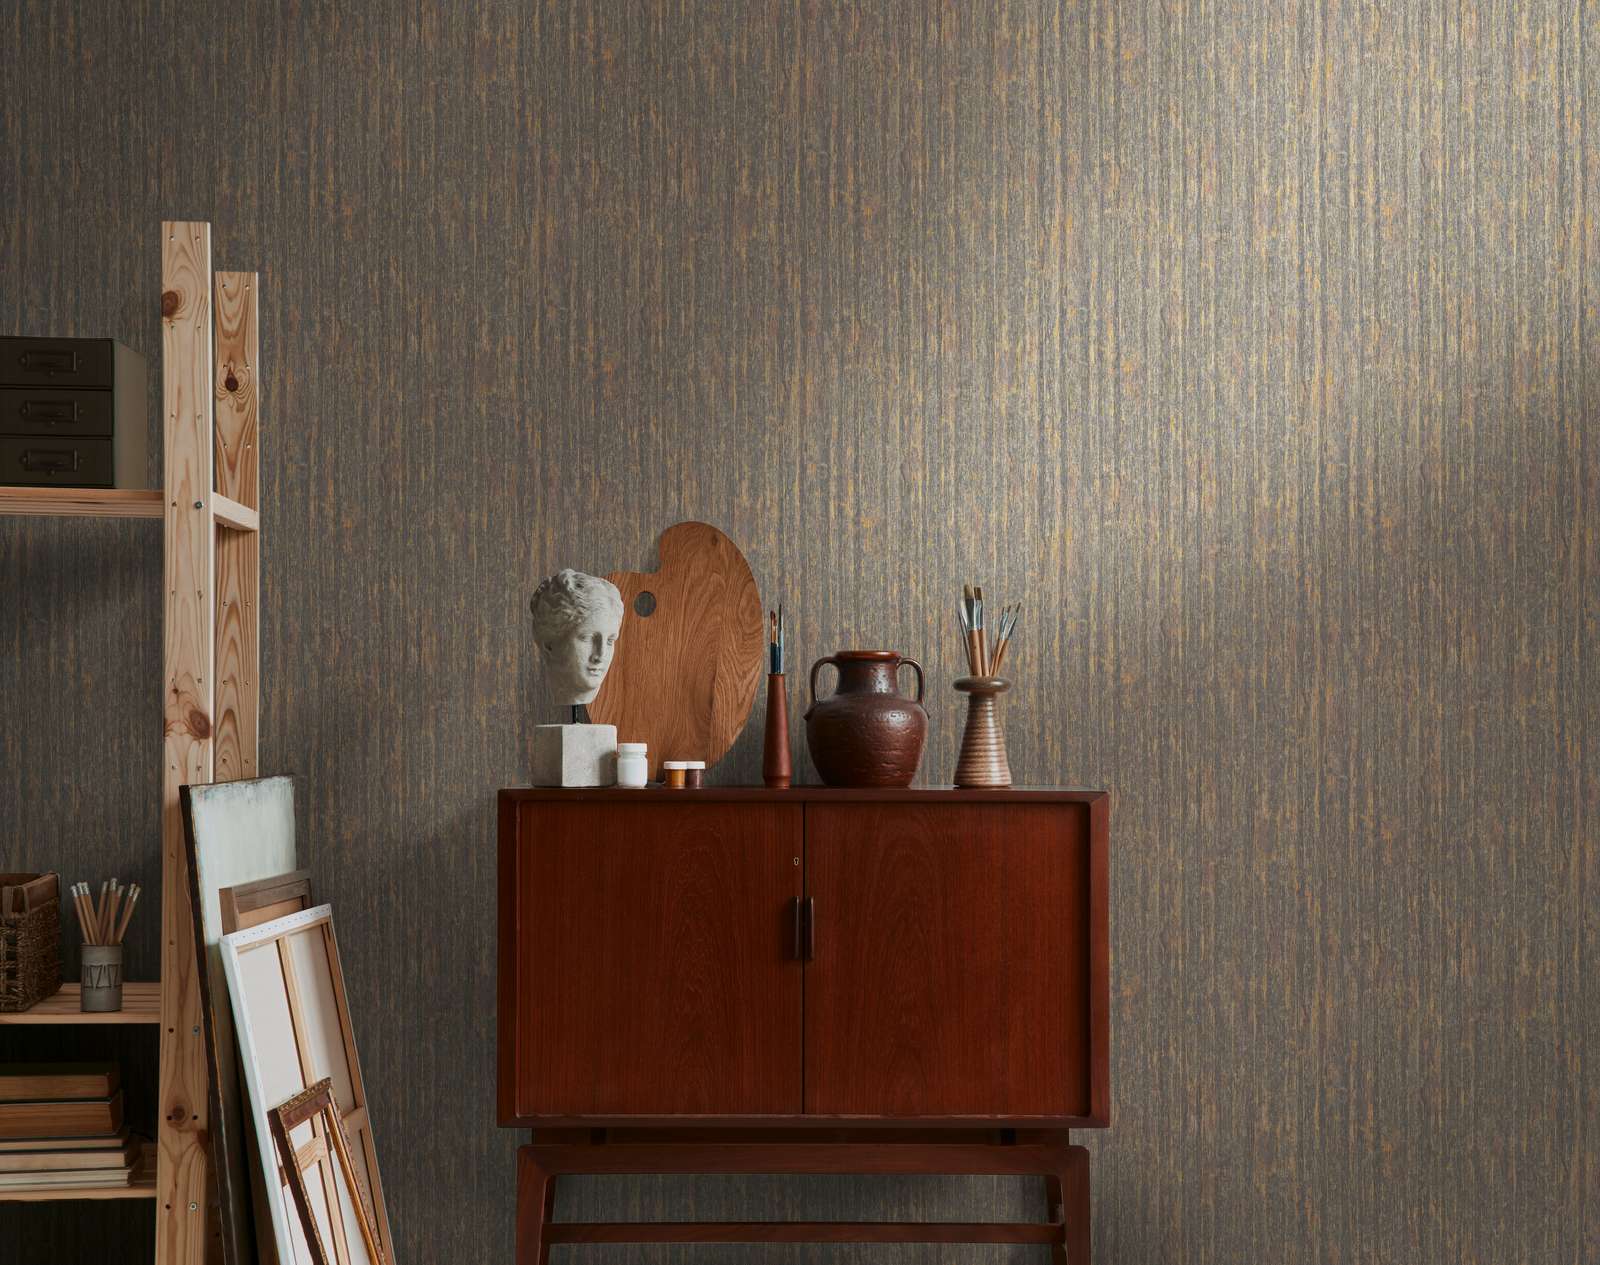             Non-woven wallpaper with wavy line pattern - black, orange, bronze
        